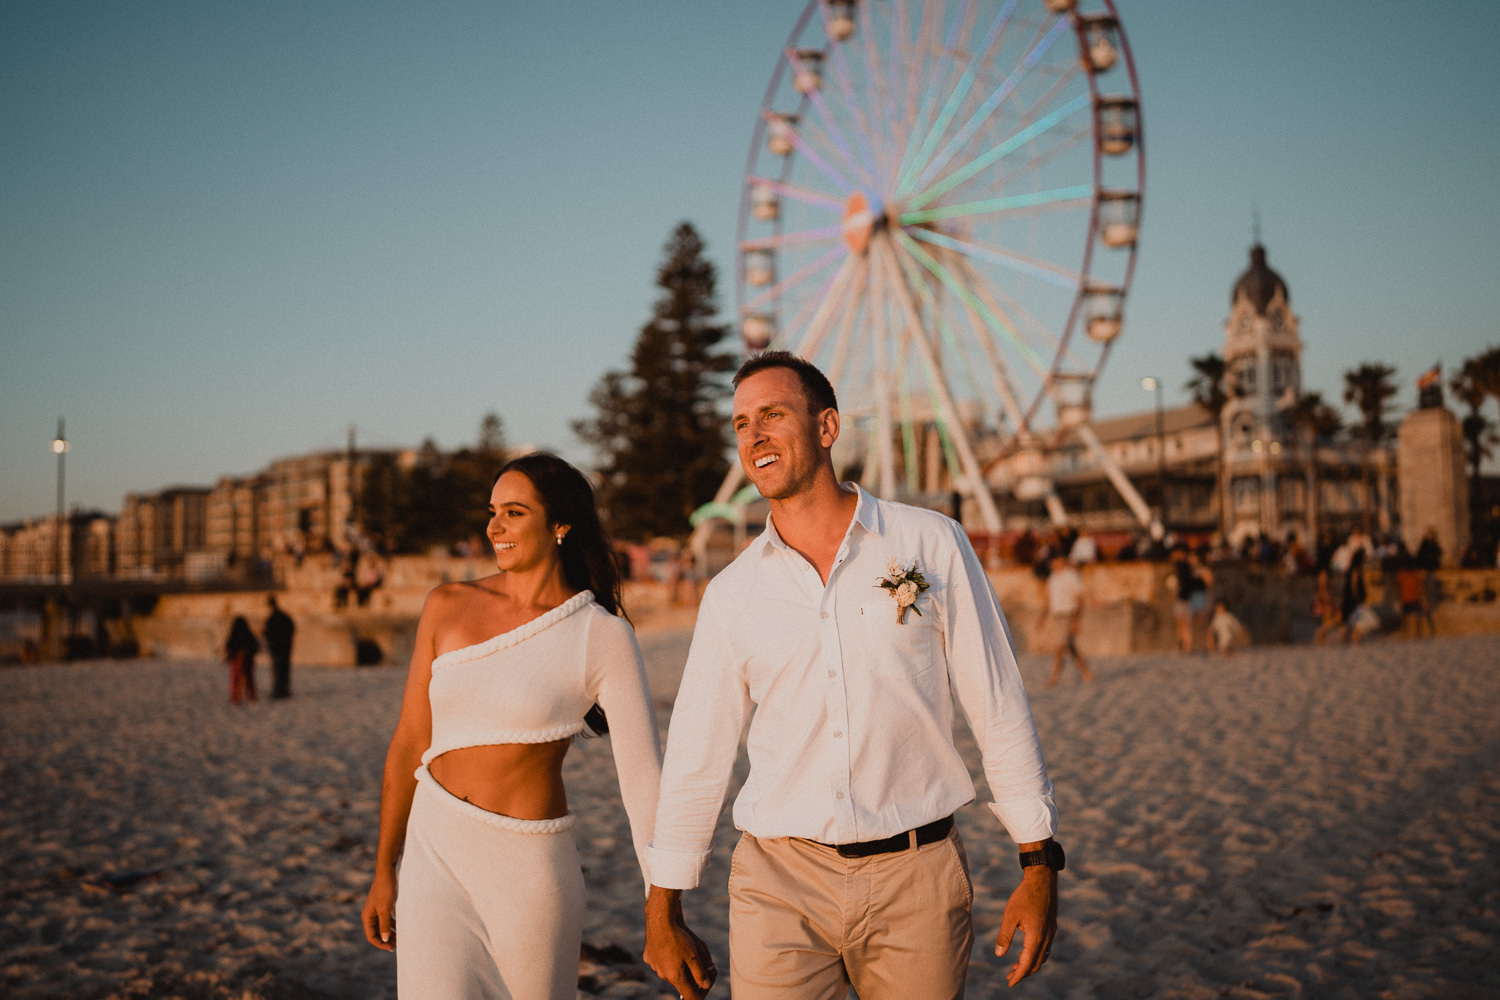 Mariafe Artacho del Solar wedding photo with husband Jack Curtin at Glenelg Beach in Adelaide